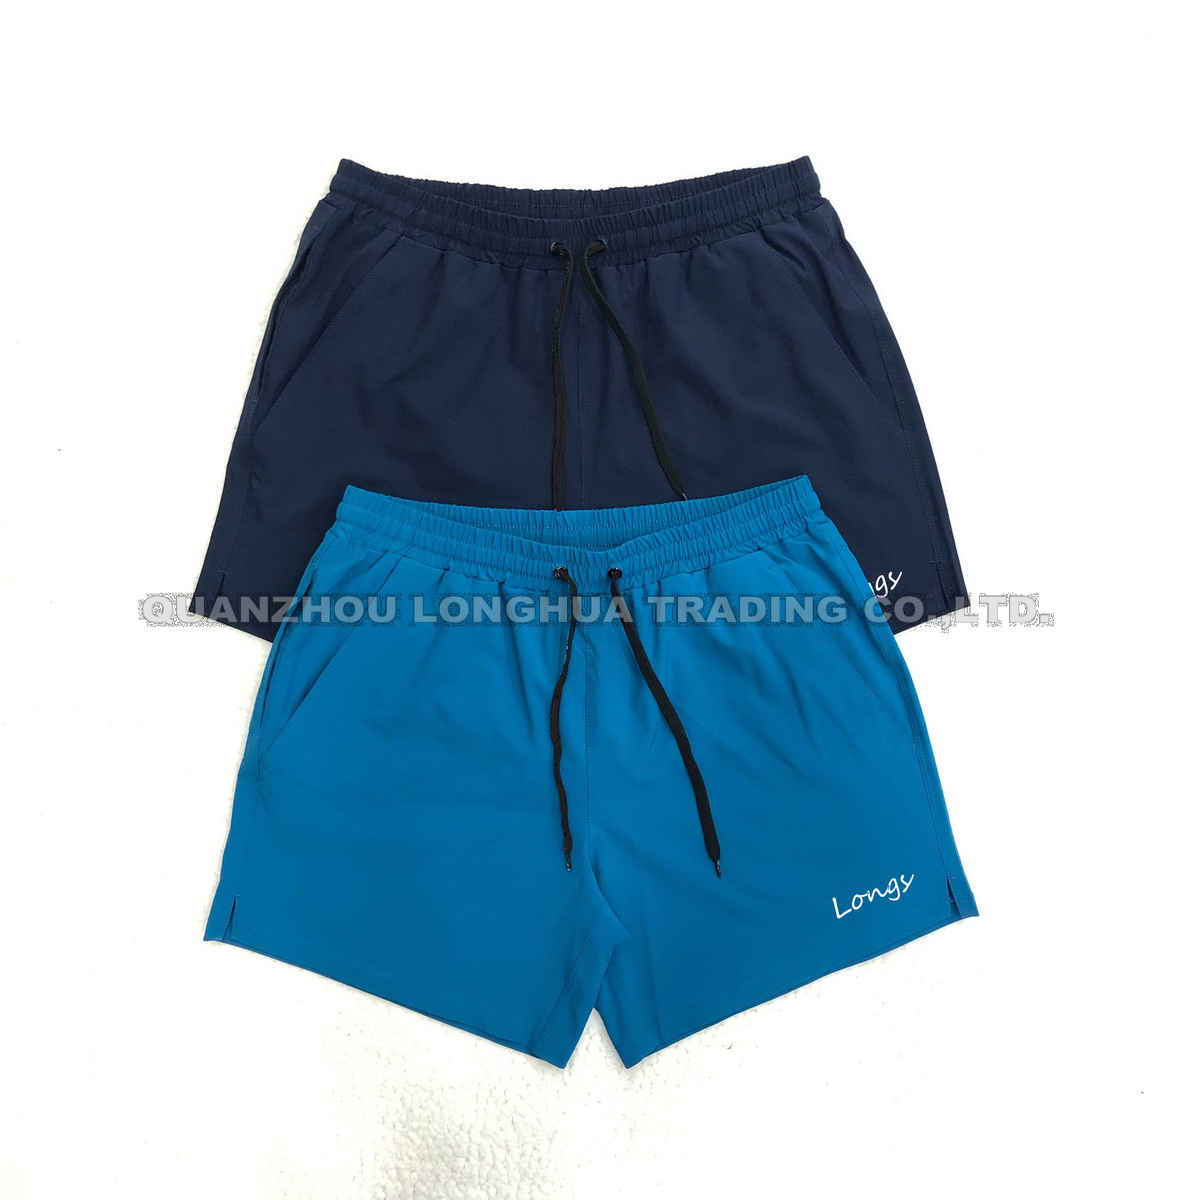 Men and Boys Polyester Spandex Waterproof Swimming Wear Beach Shorts Board Shorts with Zipper Pocket Mesh Lining Apparel Trousers Kids Swim Wear Pants